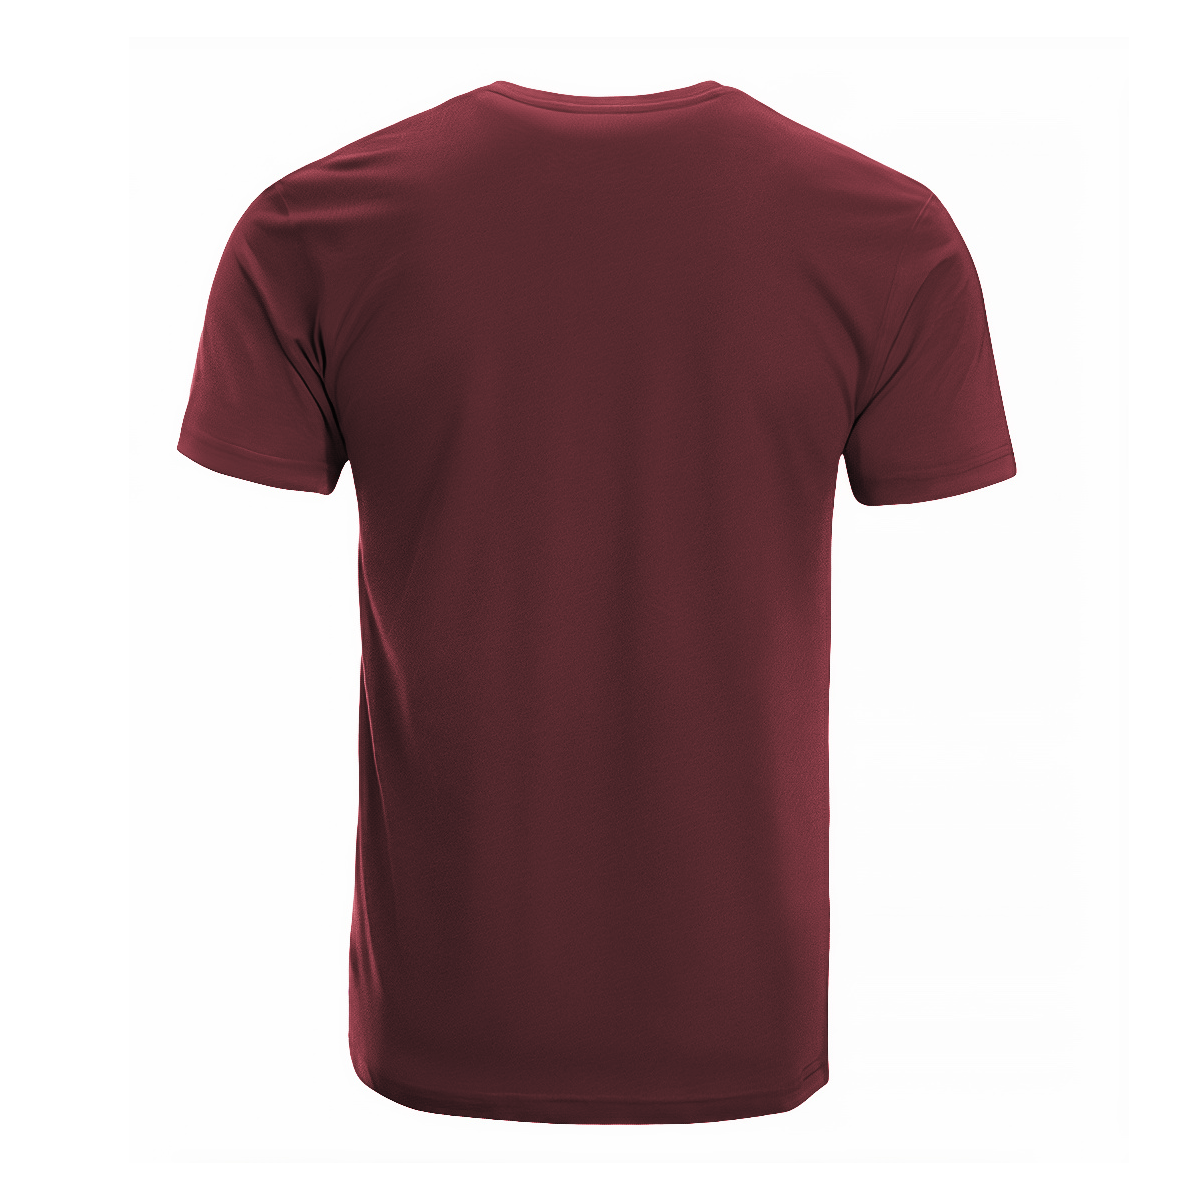 Wilson Tartan Crest T-shirt - I'm not yelling style